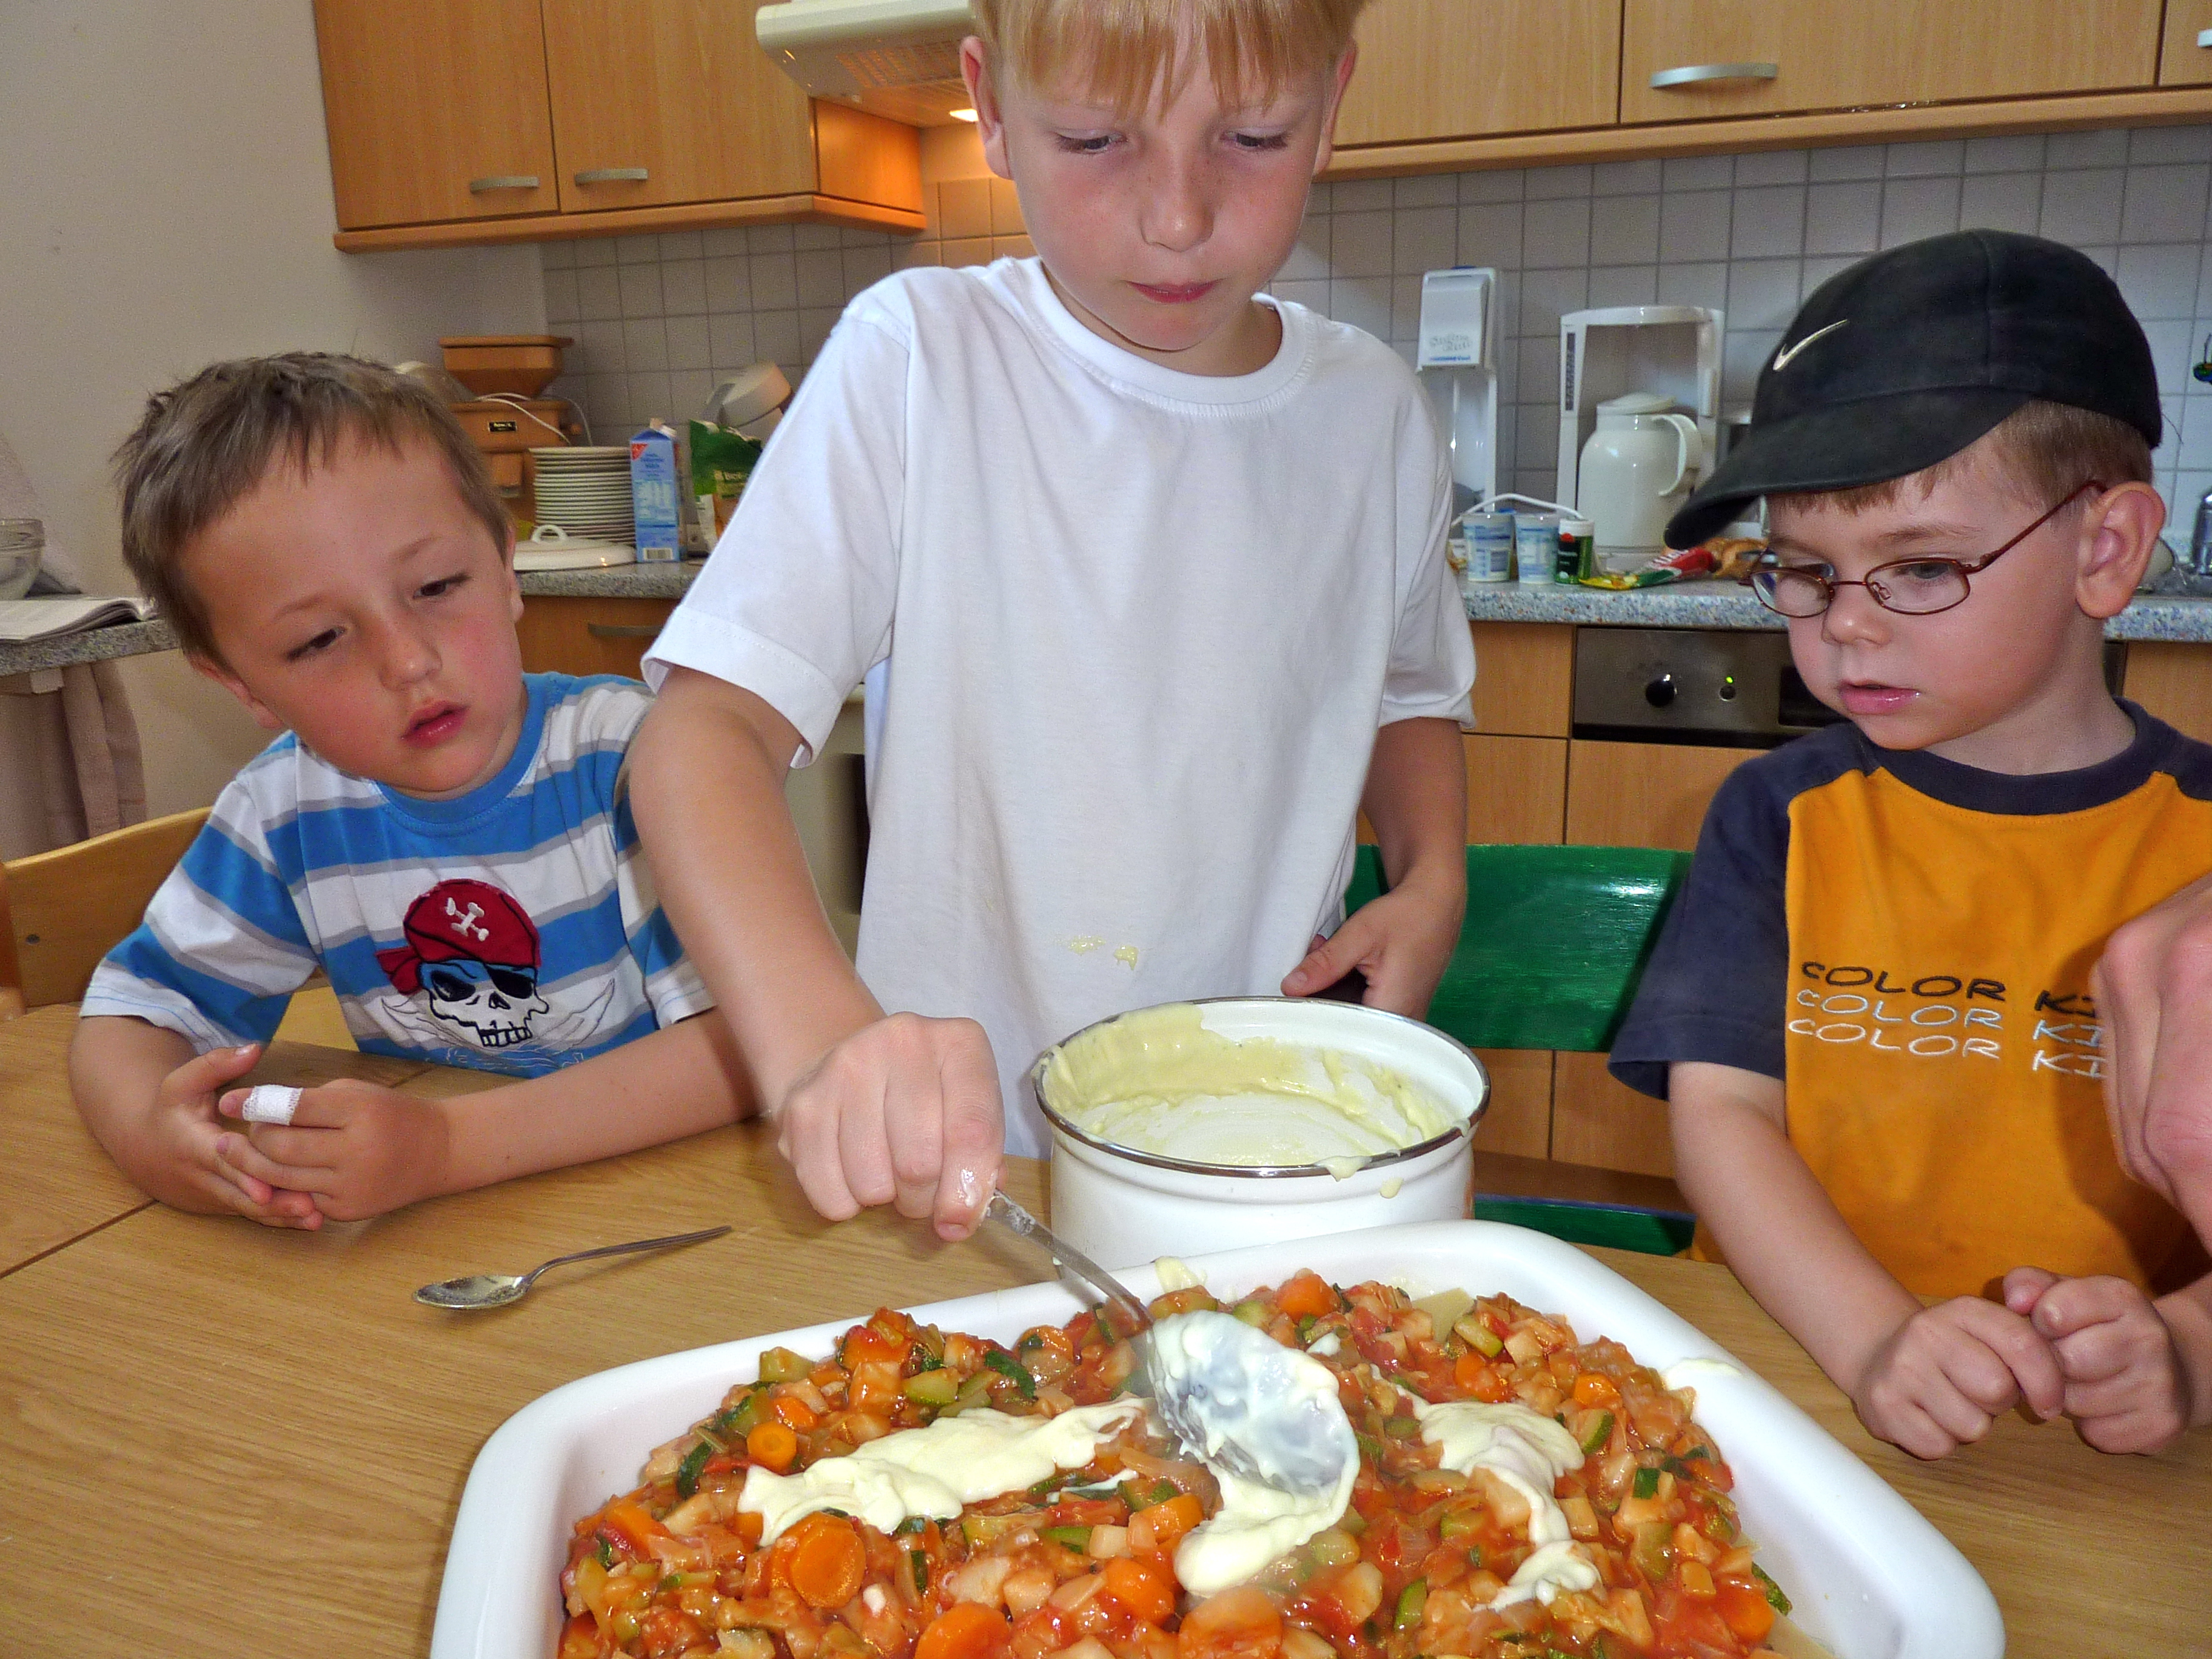 Norderney - Junge bereitet Gemüselasagne vor